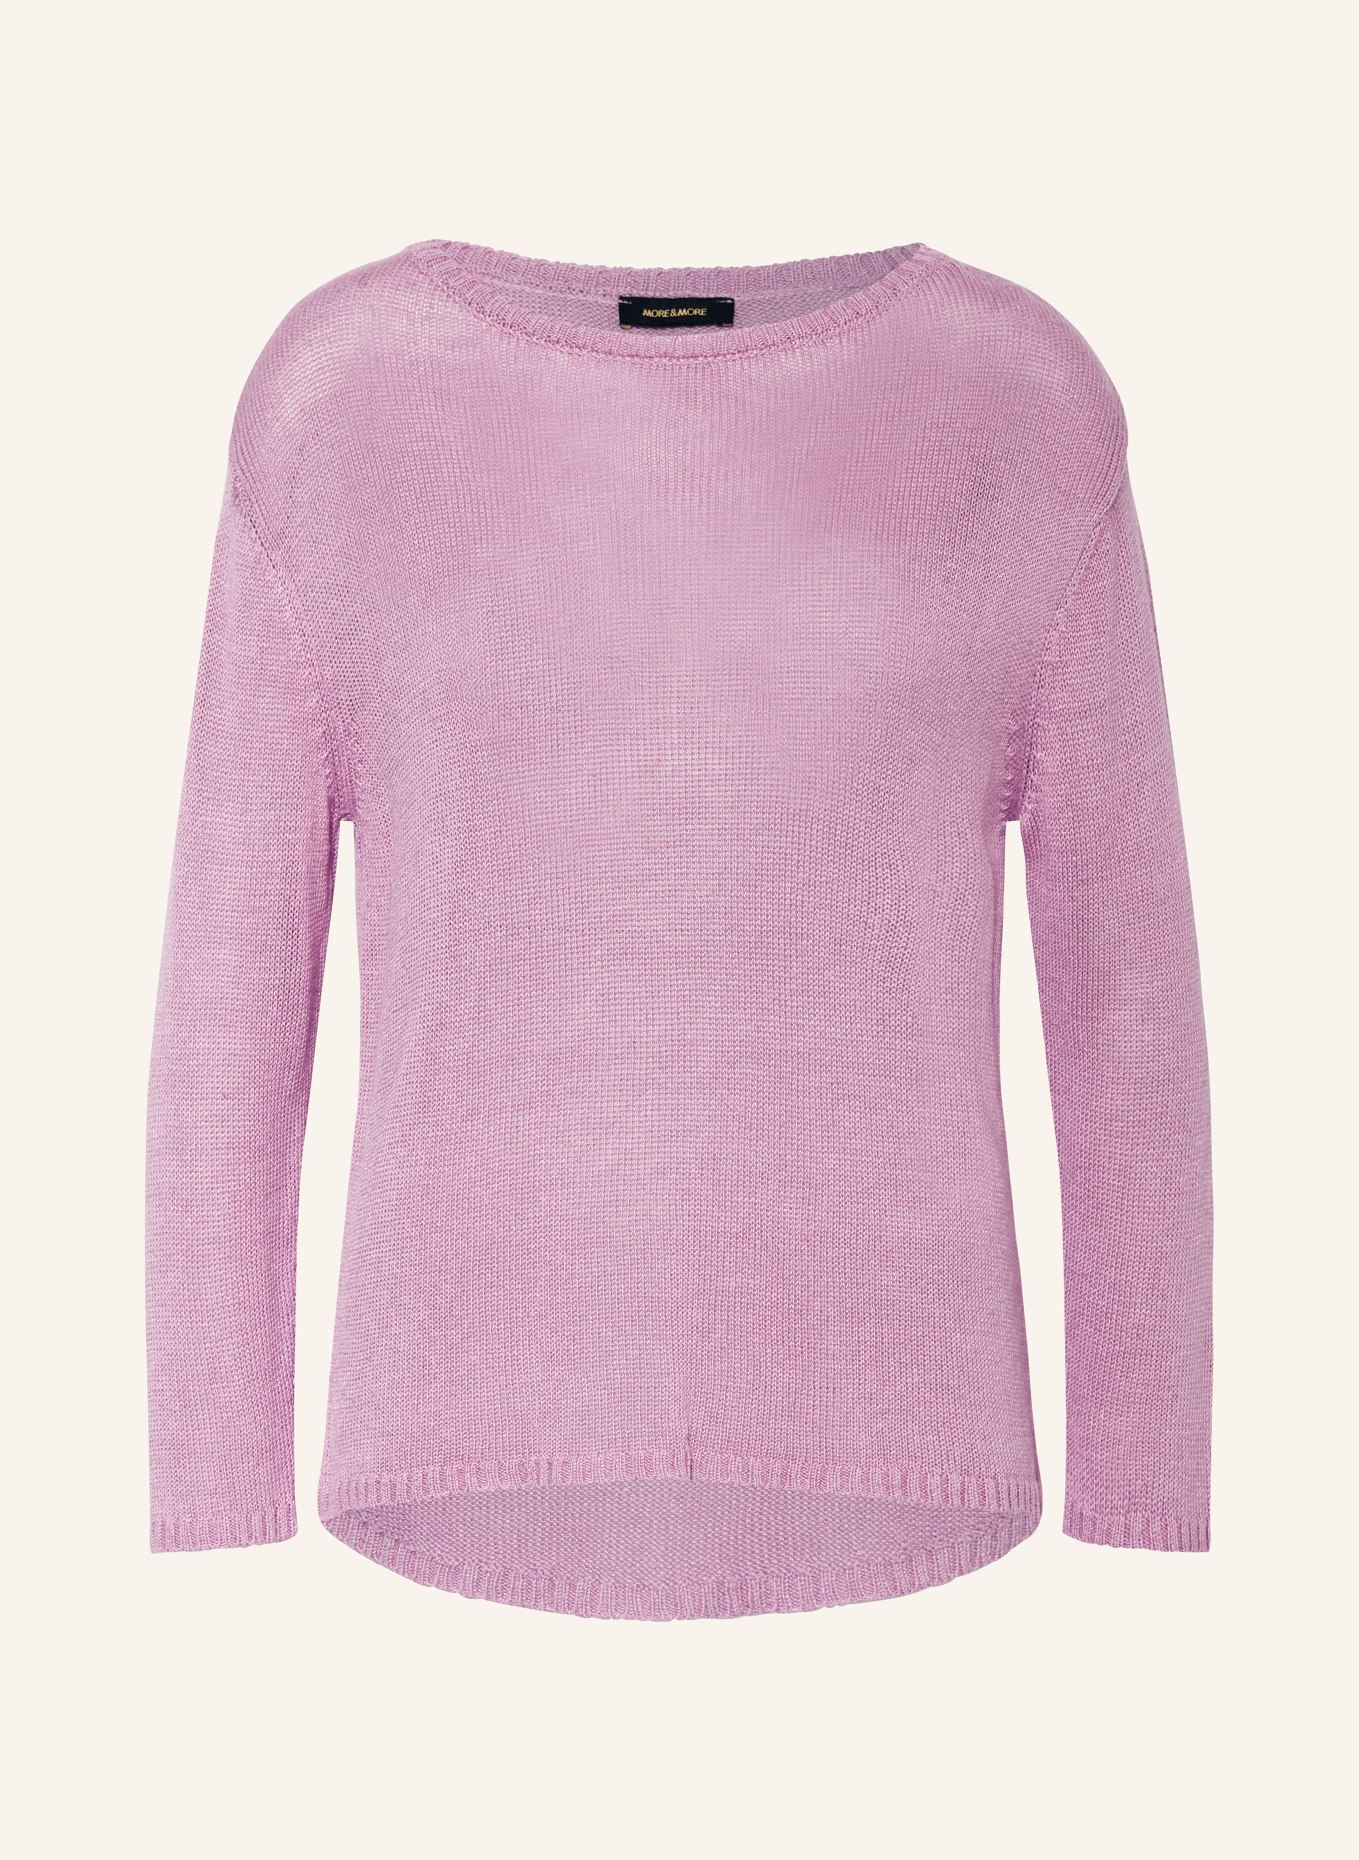 MORE & MORE Sweater, Color: LIGHT PURPLE (Image 1)